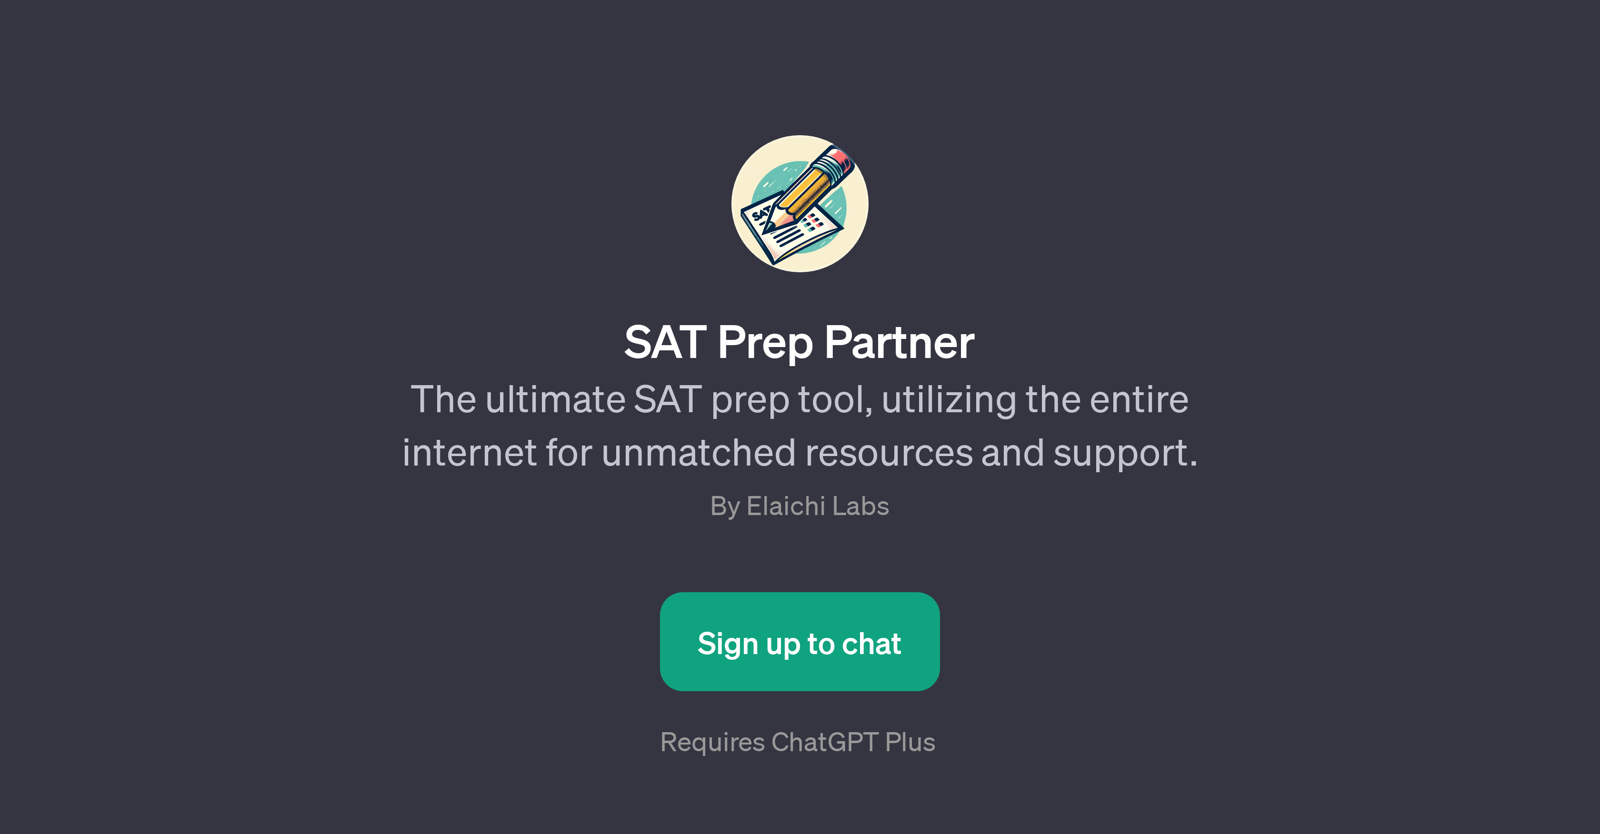 SAT Prep Partner website